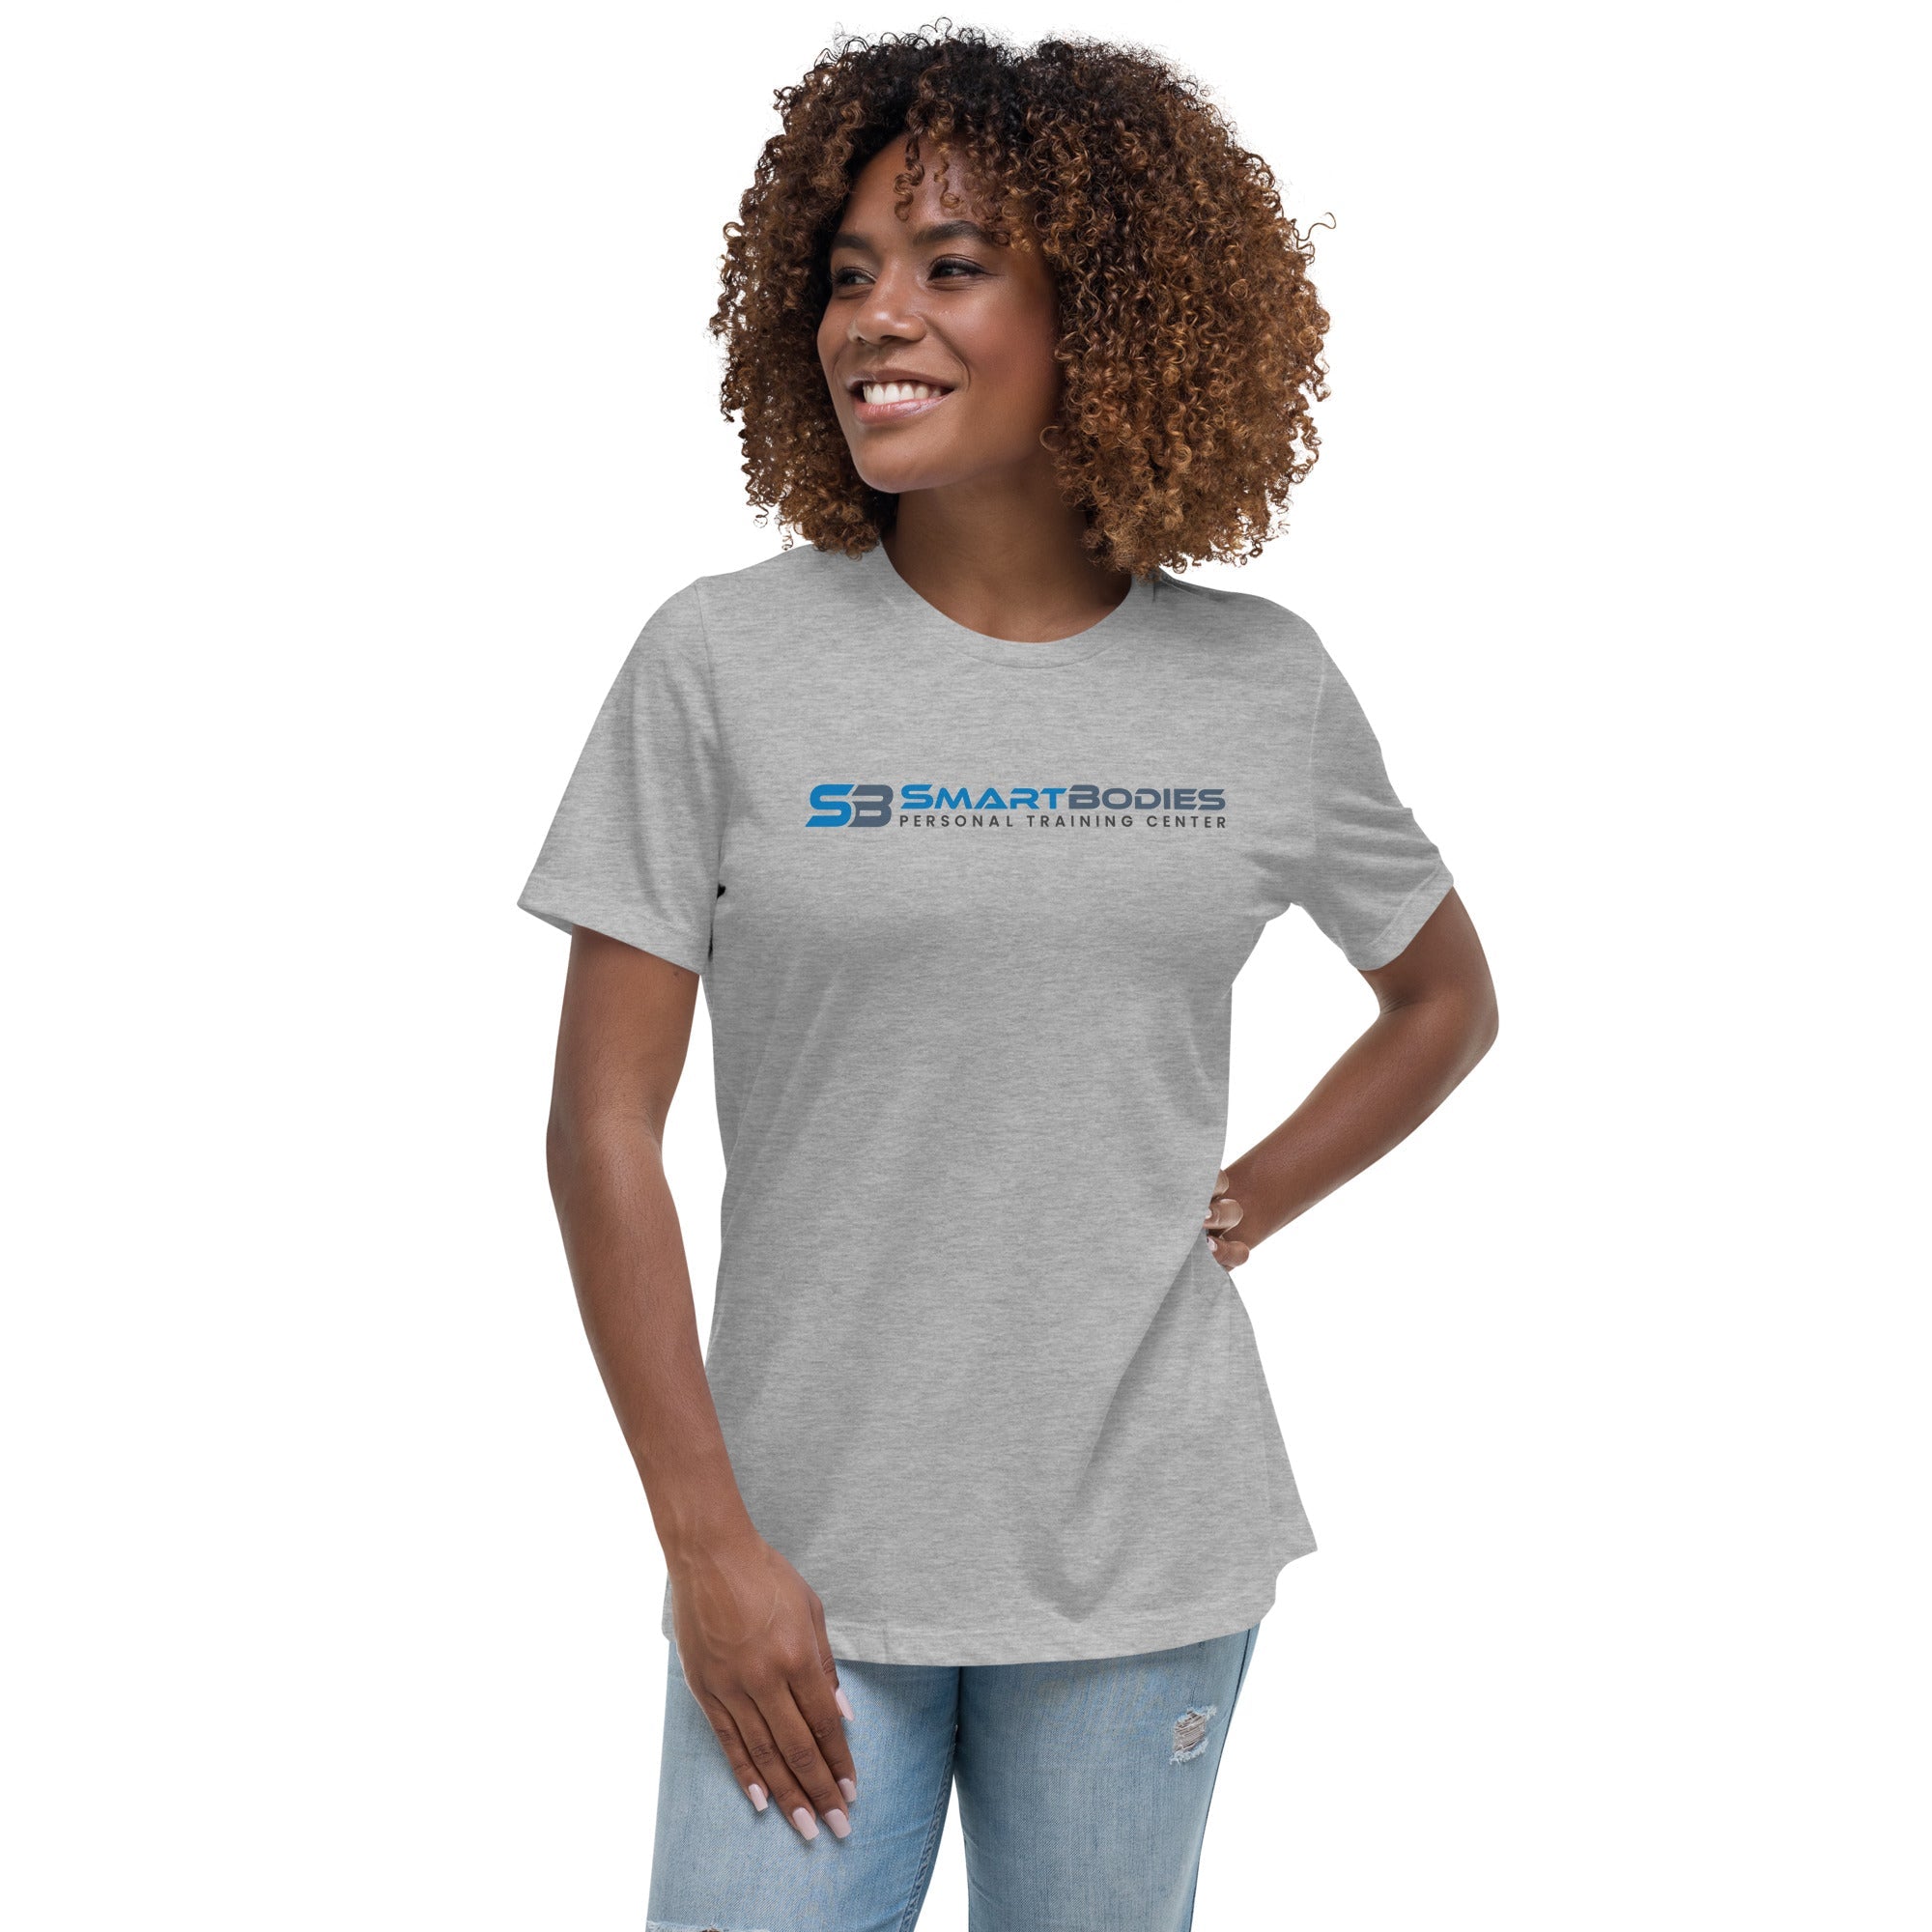 Smart Bodies Women's Relaxed T-Shirt V1